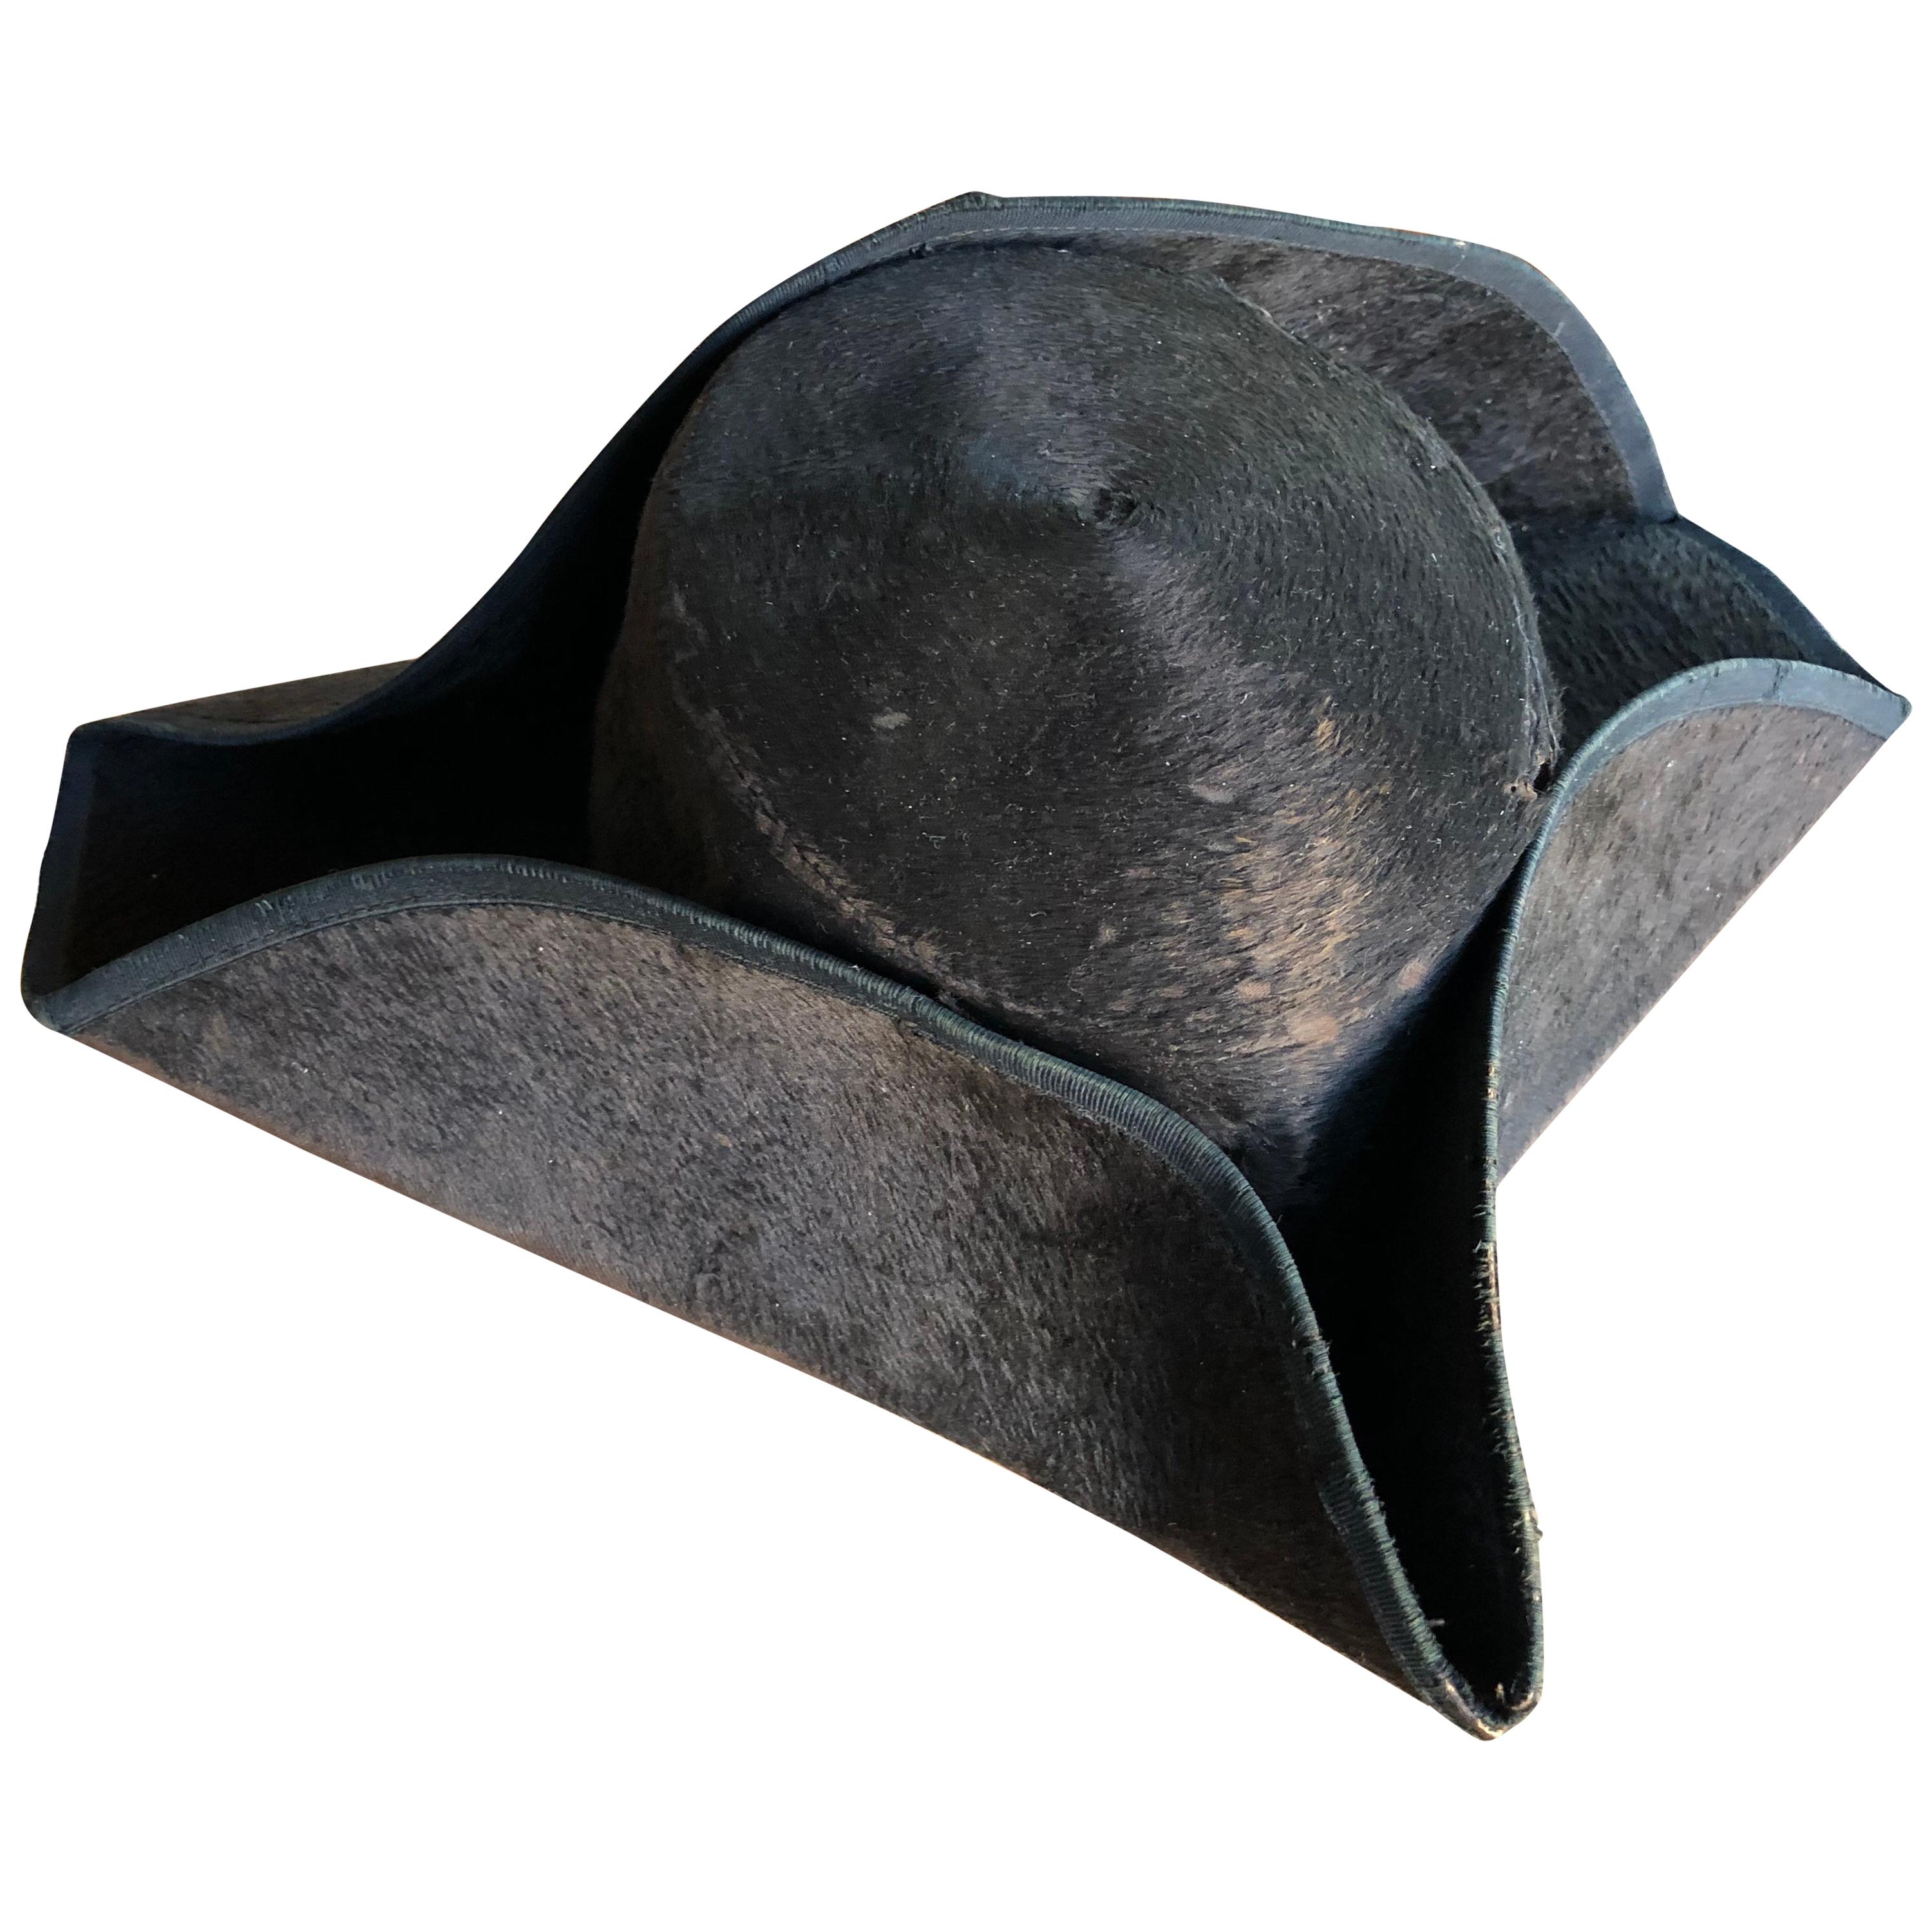 Exceedingly Rare 18th Century American Tricorn Hat